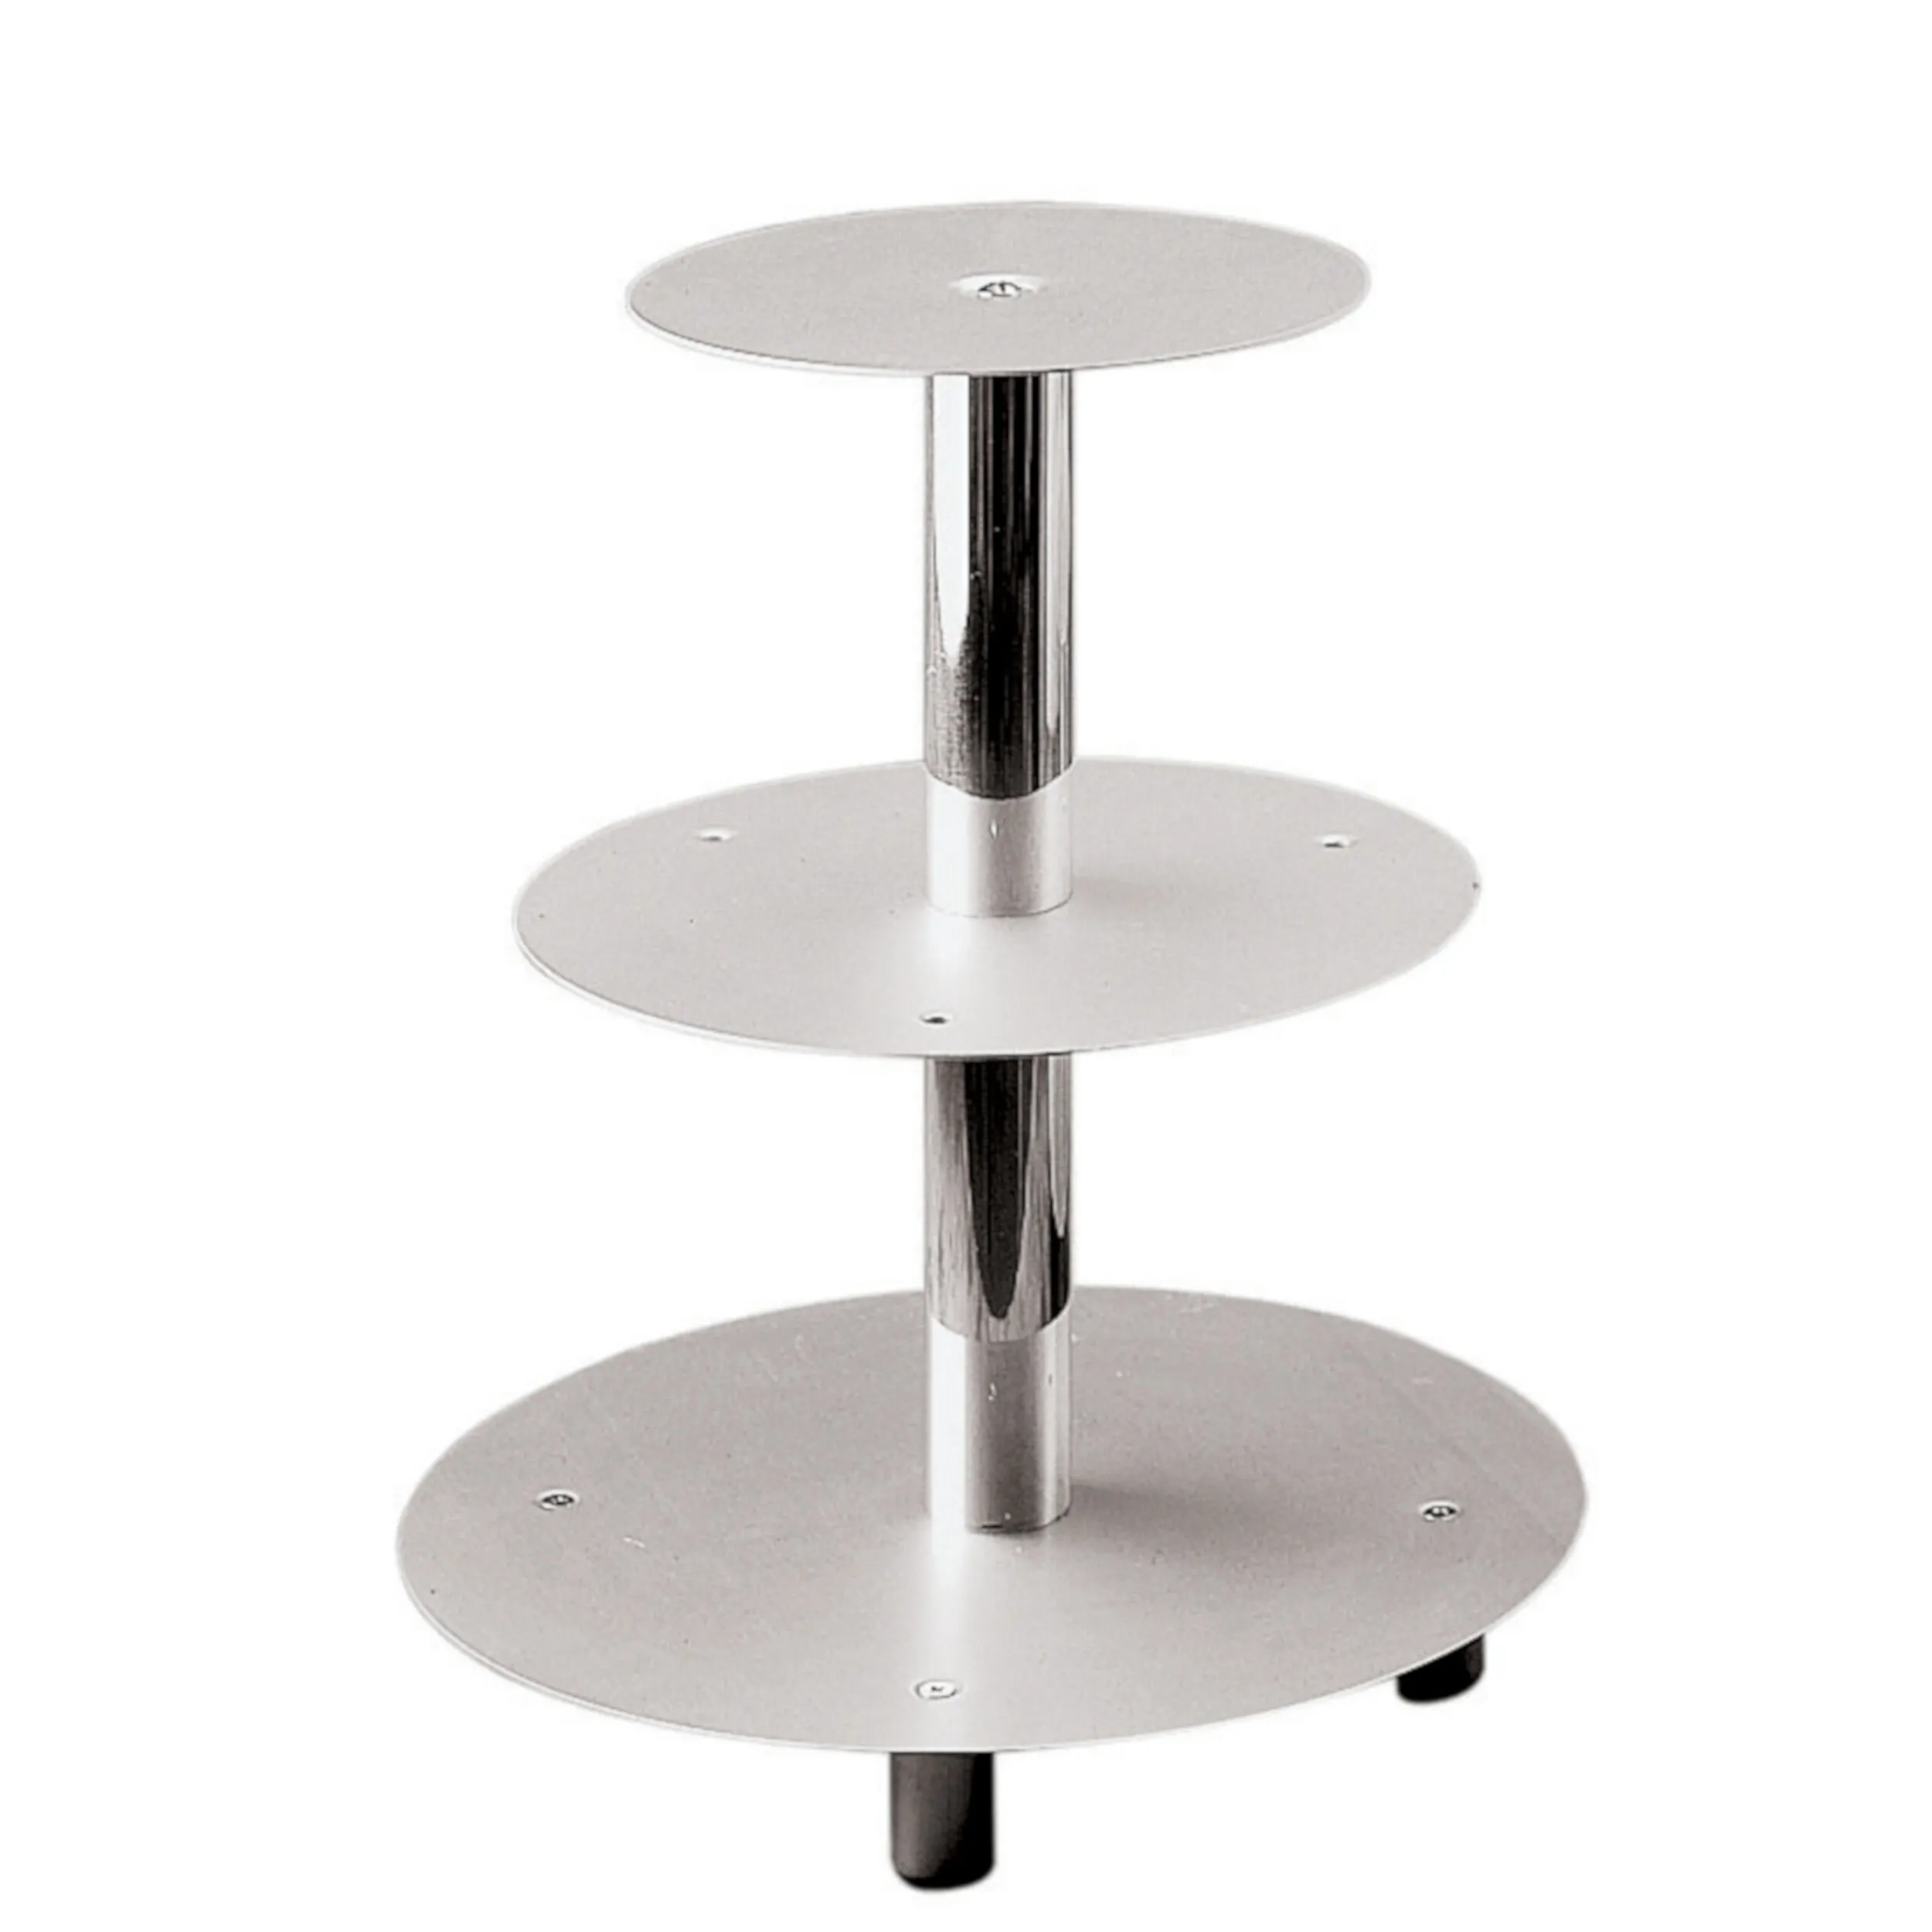 Alzata Per Torte 3 Piani Alluminio, diametro 32, 26 20 peso 1,48 kg Dimensioni dischi : Ø20-26-32 cm distanza frà i dischi h16,5 cm